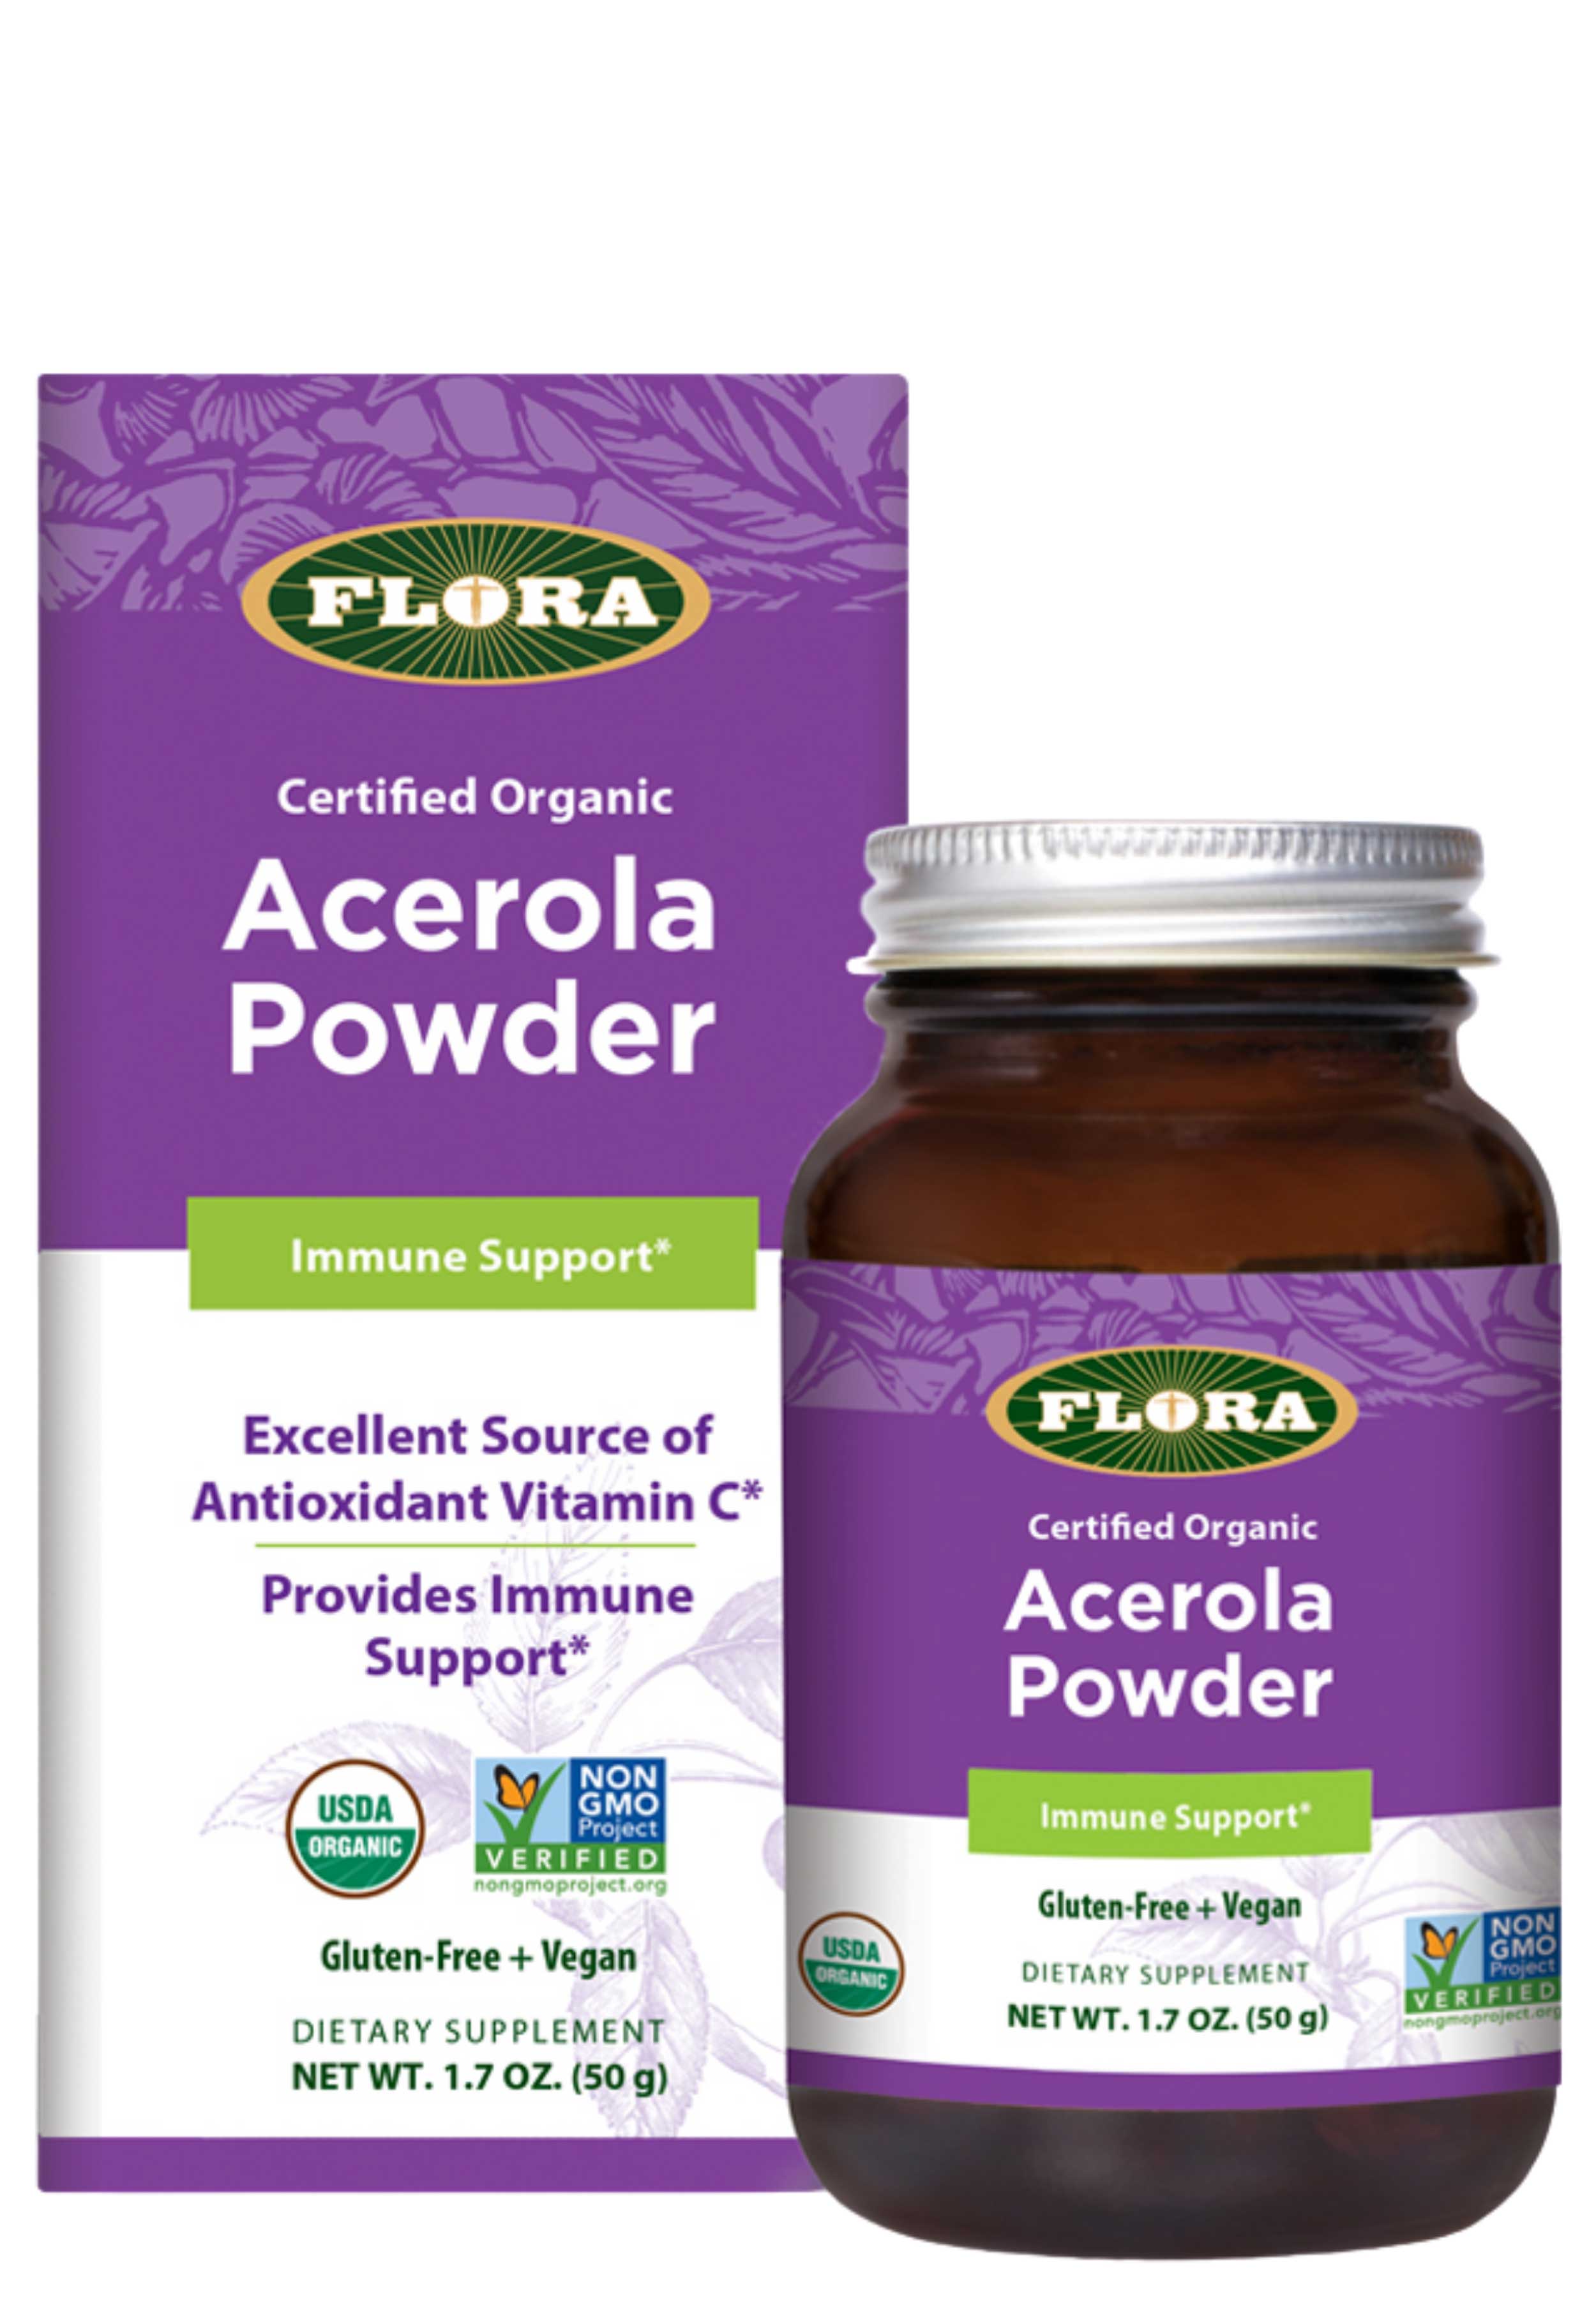 Flora Acerola Powder